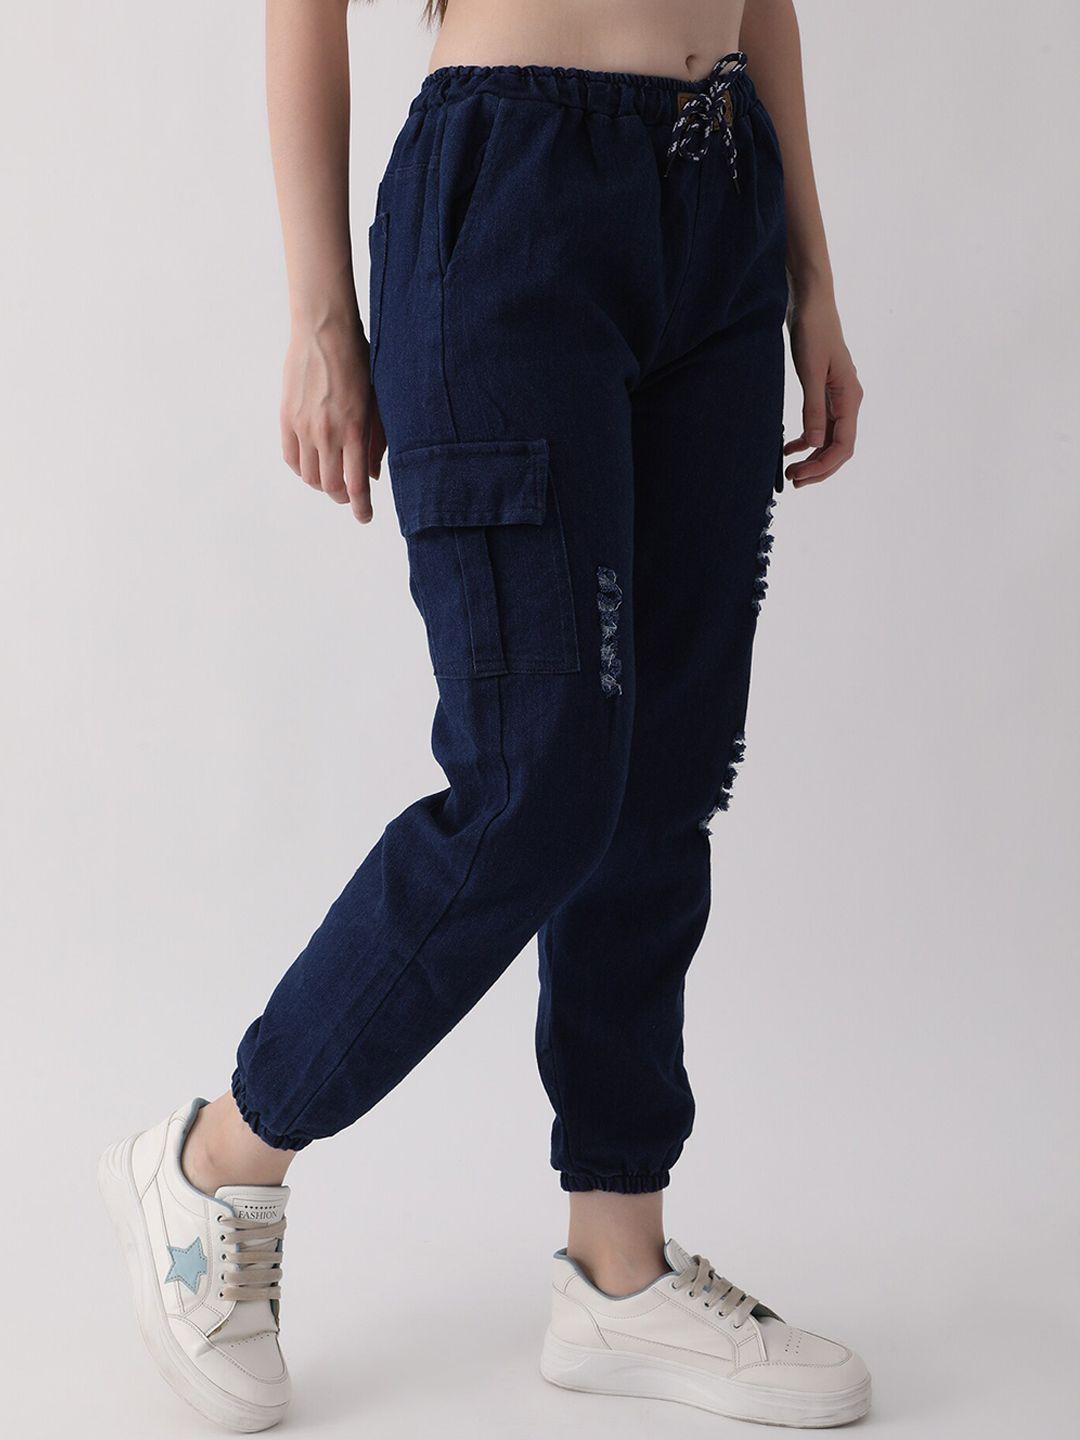 dkgf fashion women comfort jogger mid-rise low distress jeans